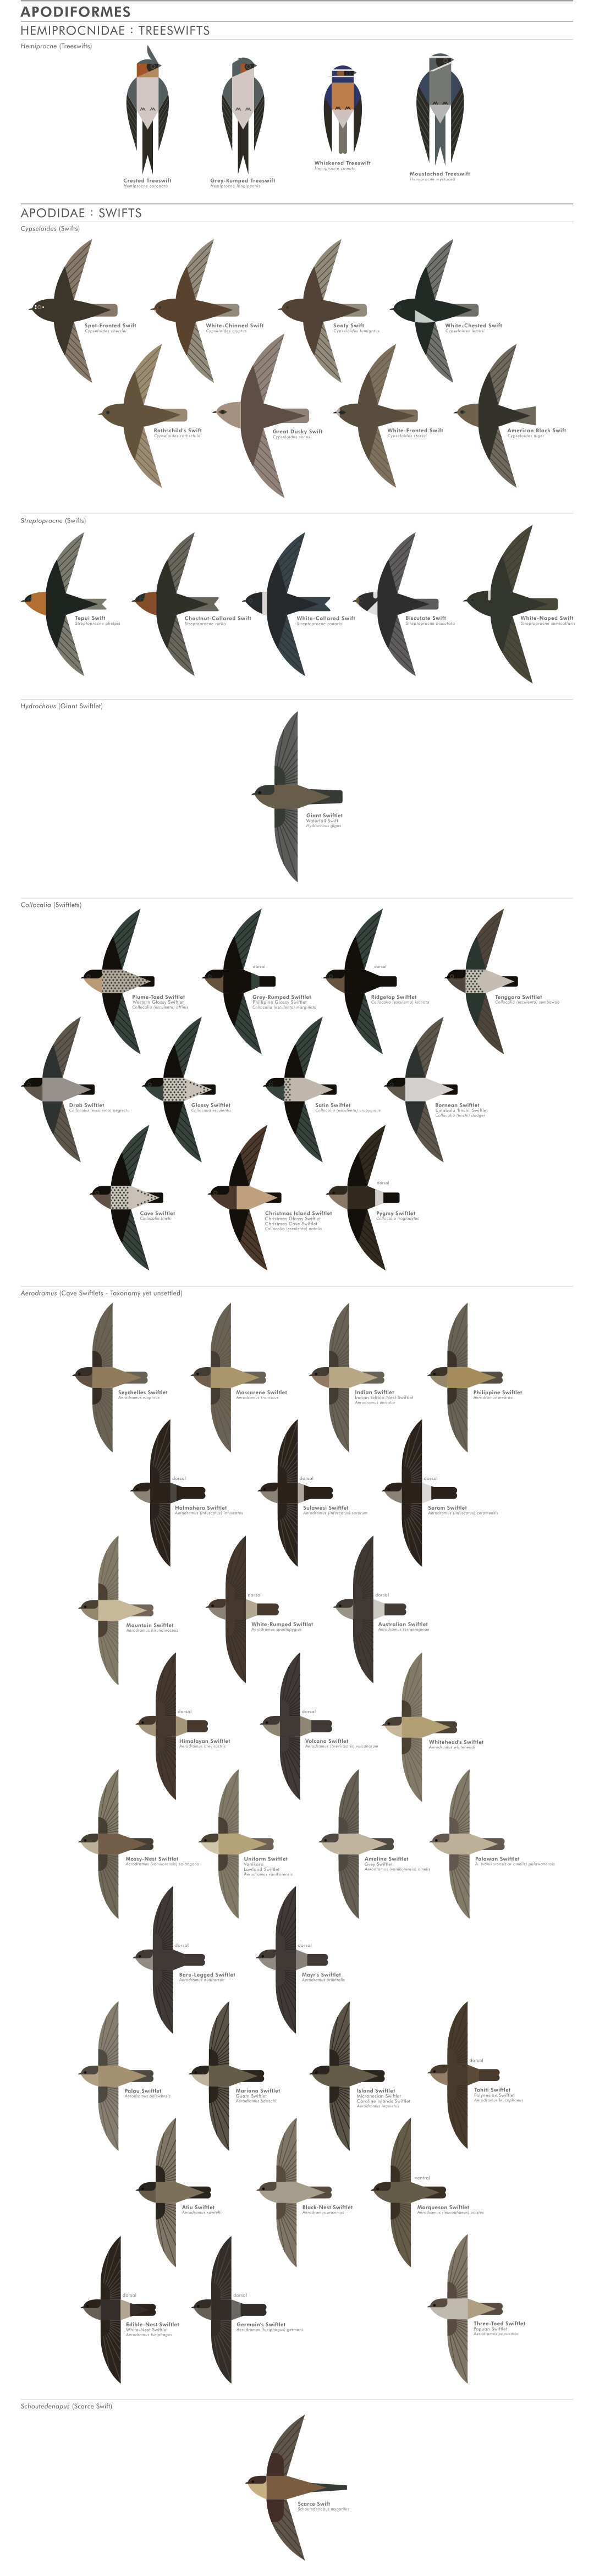 scott partridge - ave - avian vector encyclopedia - swifts Apodiformes - vector bird art - bird vector art